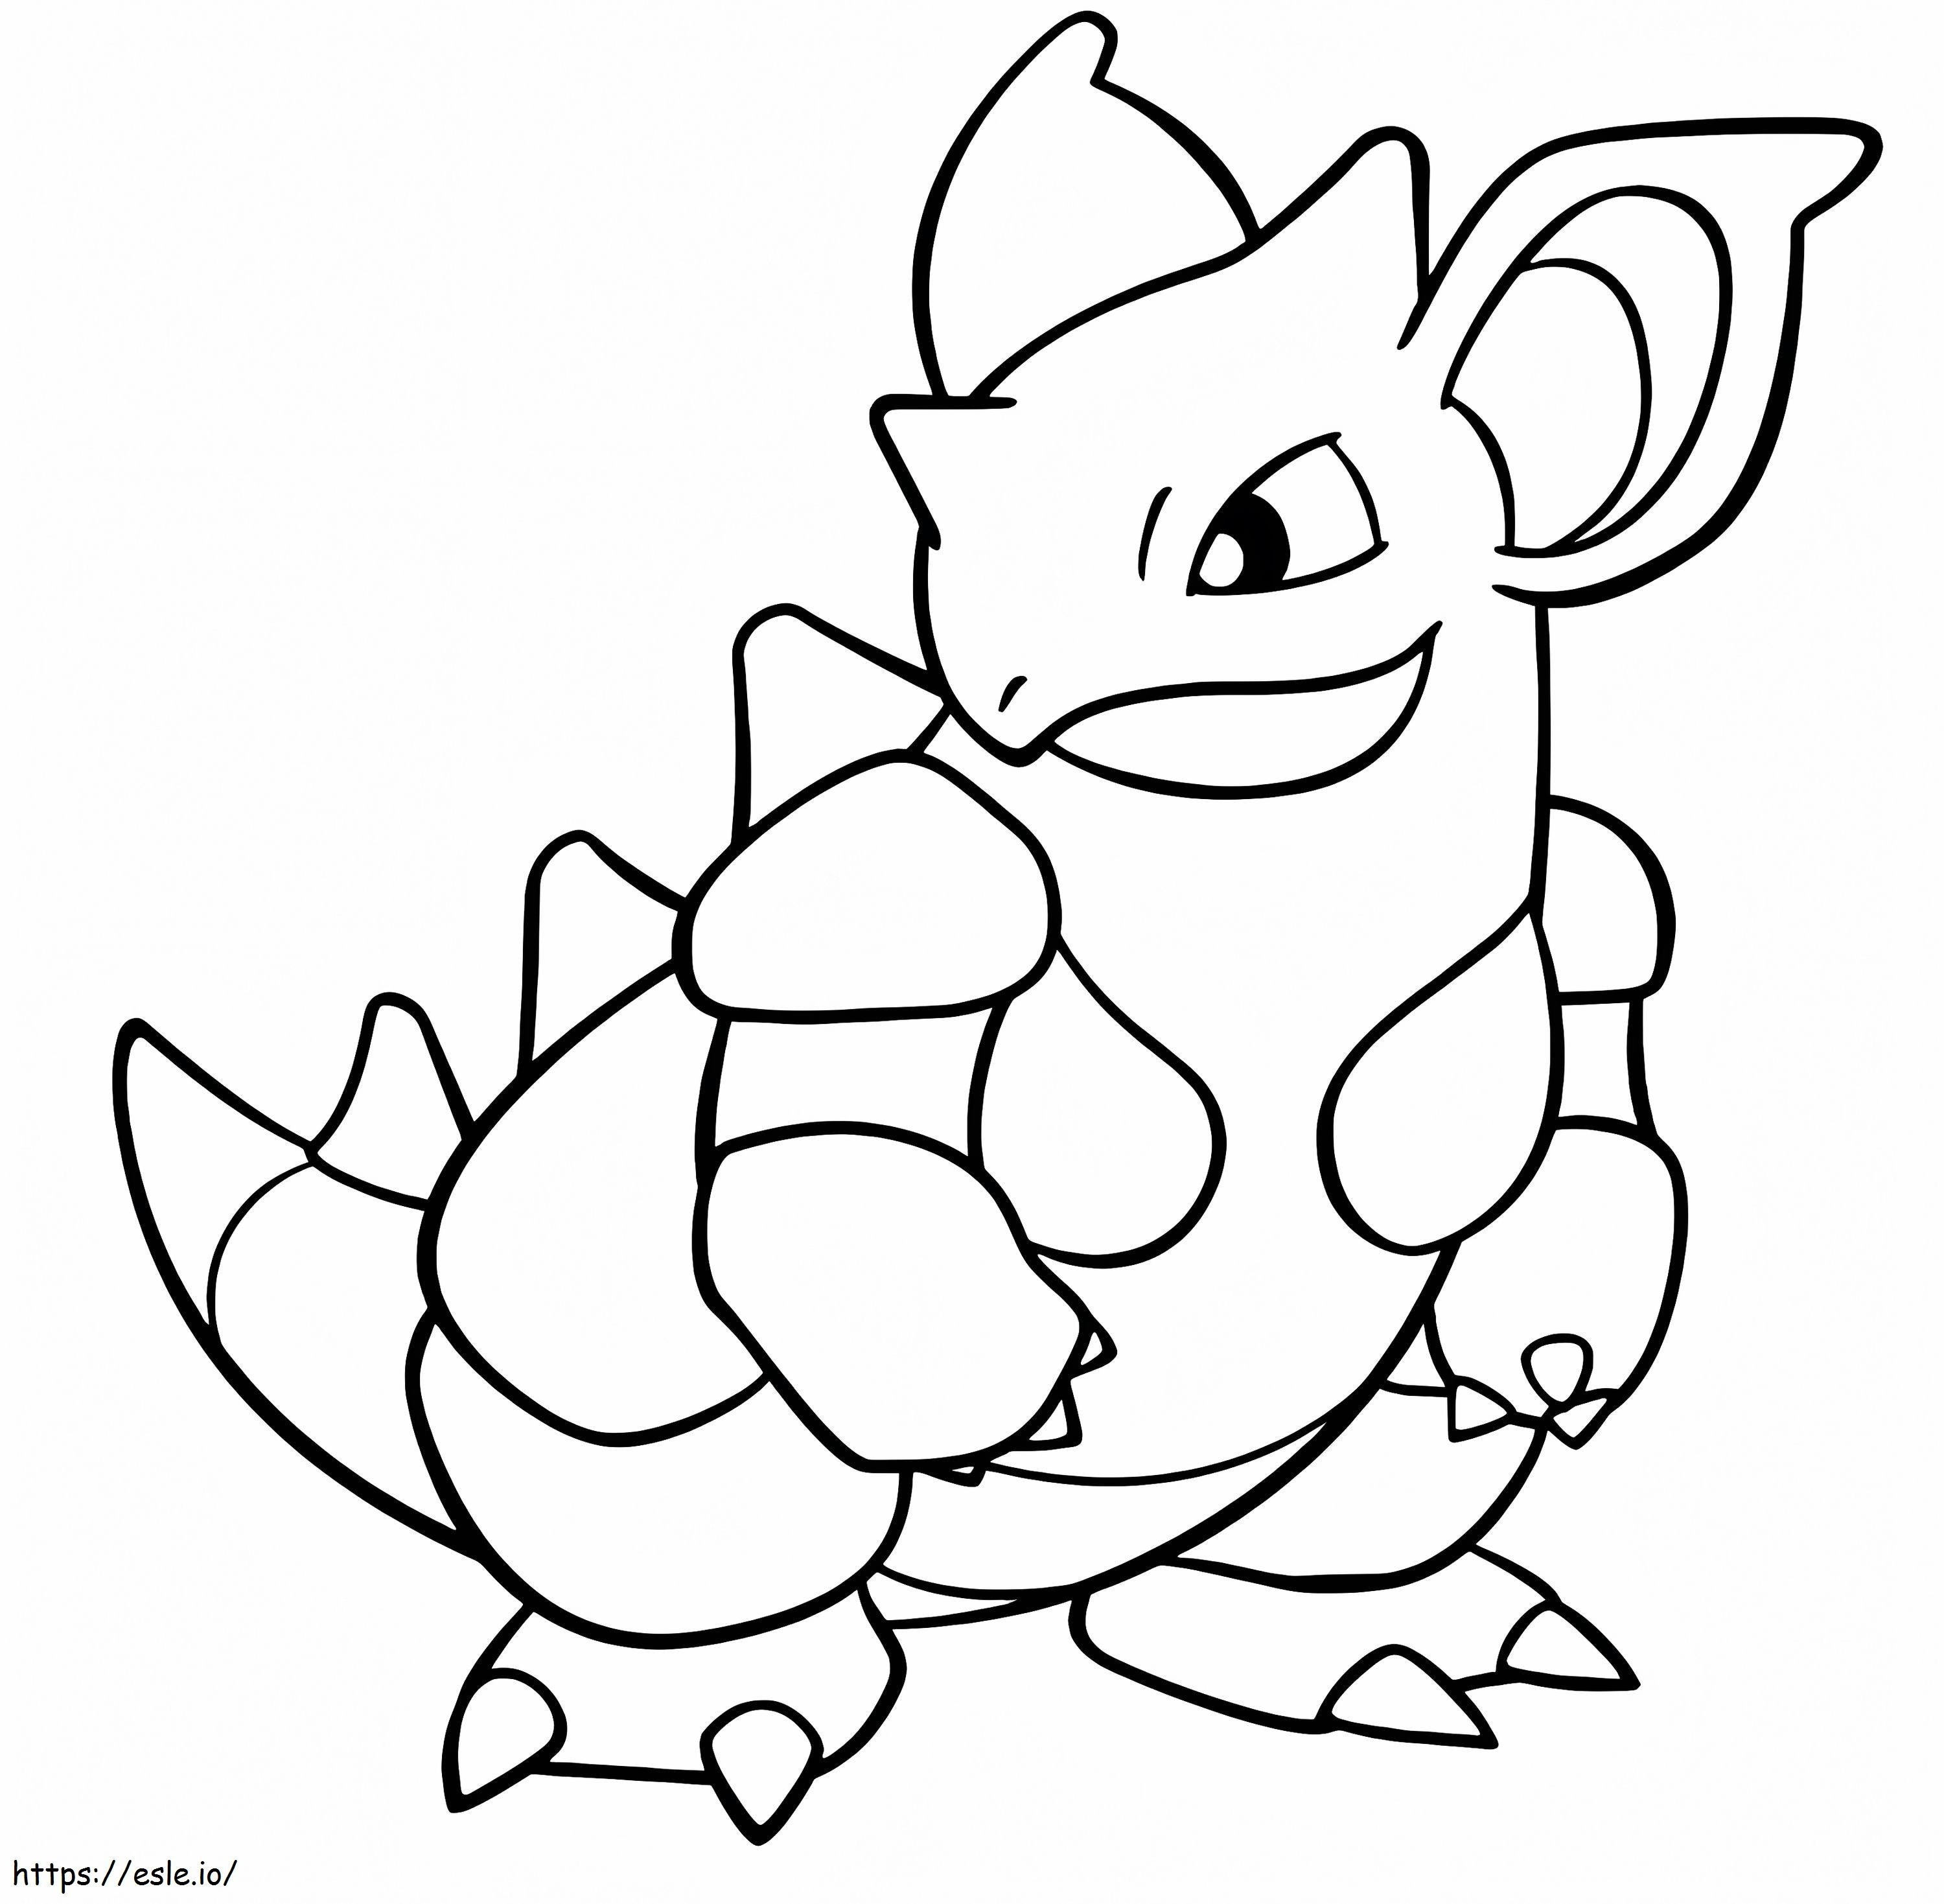 Coloriage Pokemon Nidoqueen à imprimer dessin